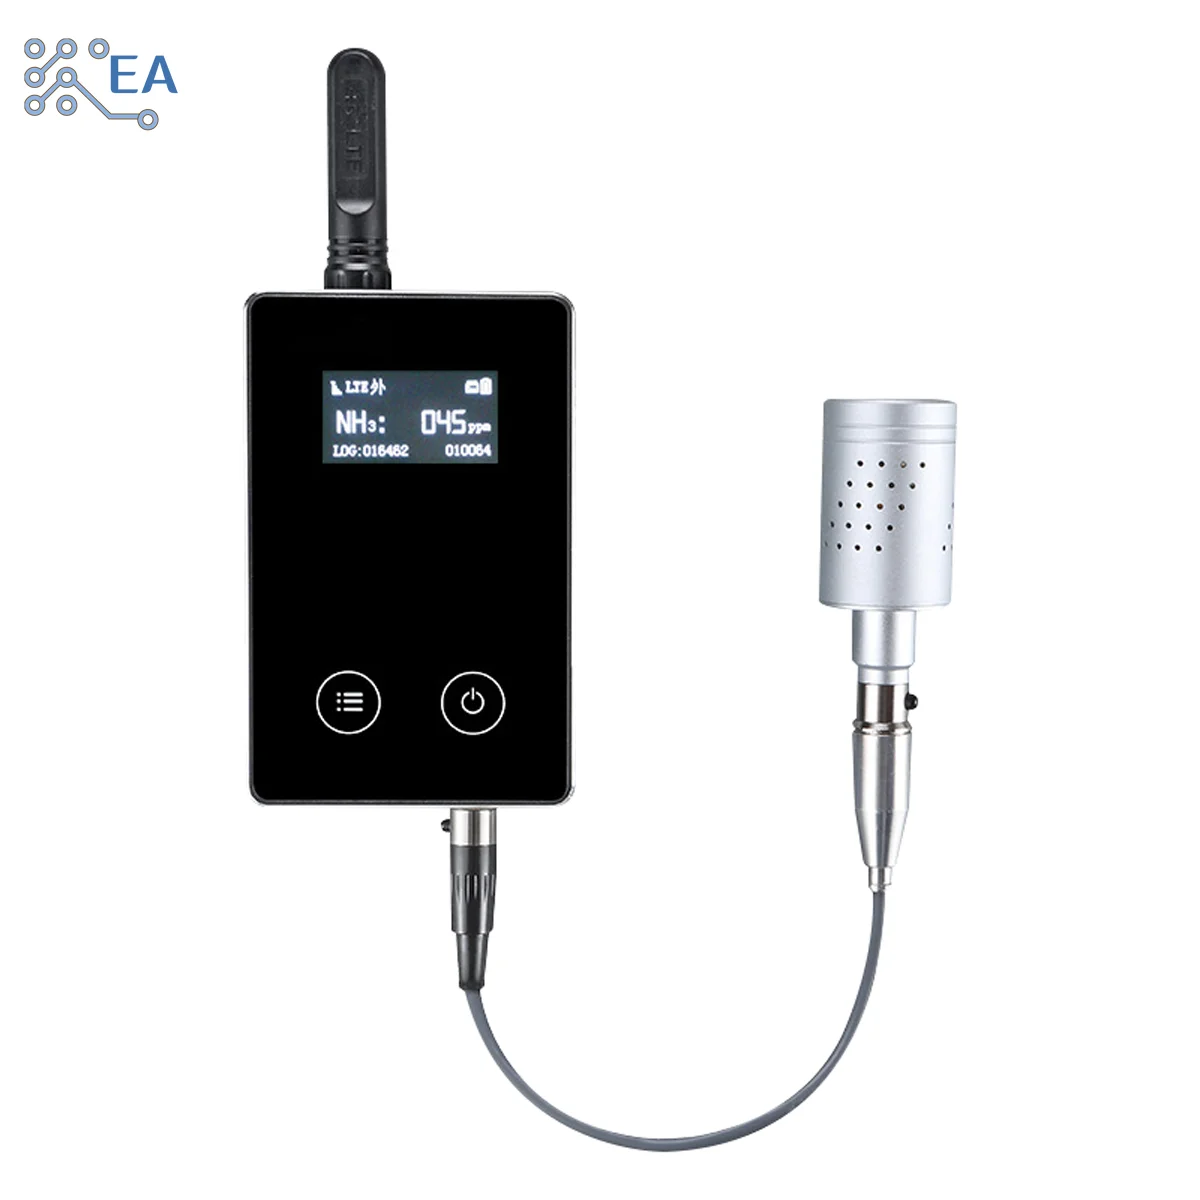 EATAC TP500 Industrial IoT sensor humidity monitor enlarge